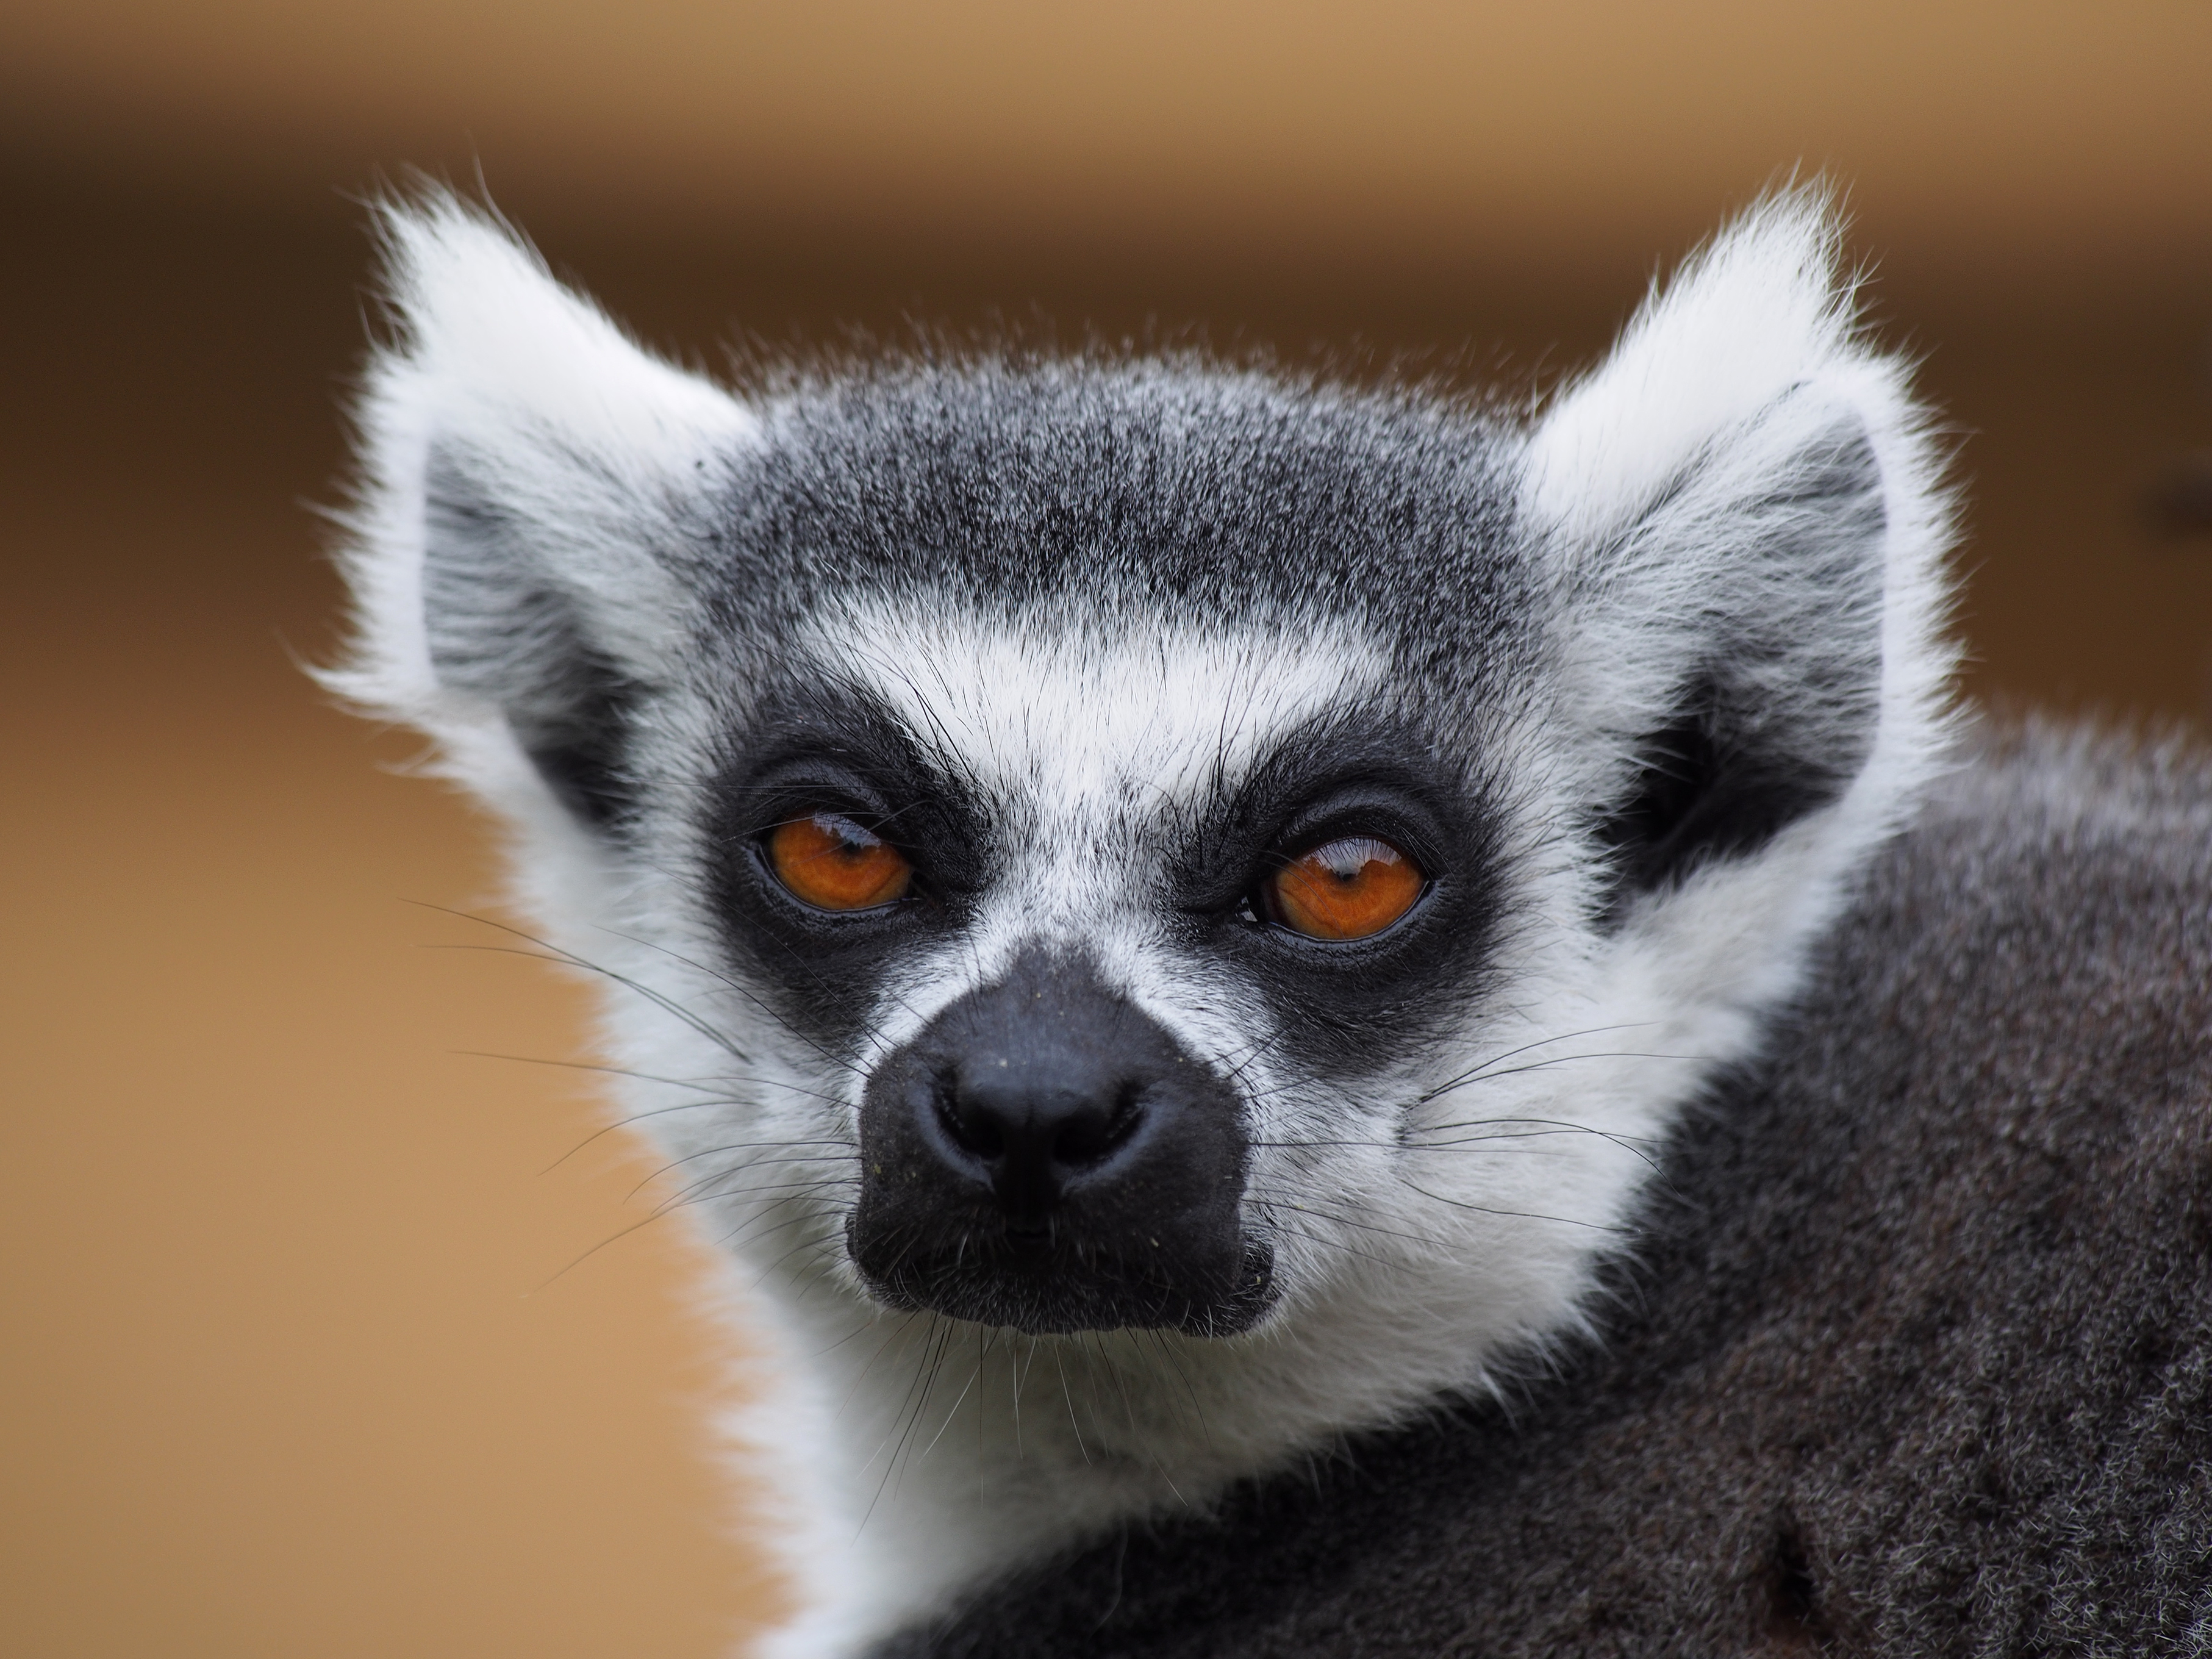 File:Ring-tailed lemur portrait 2.jpg - Wikimedia Commons